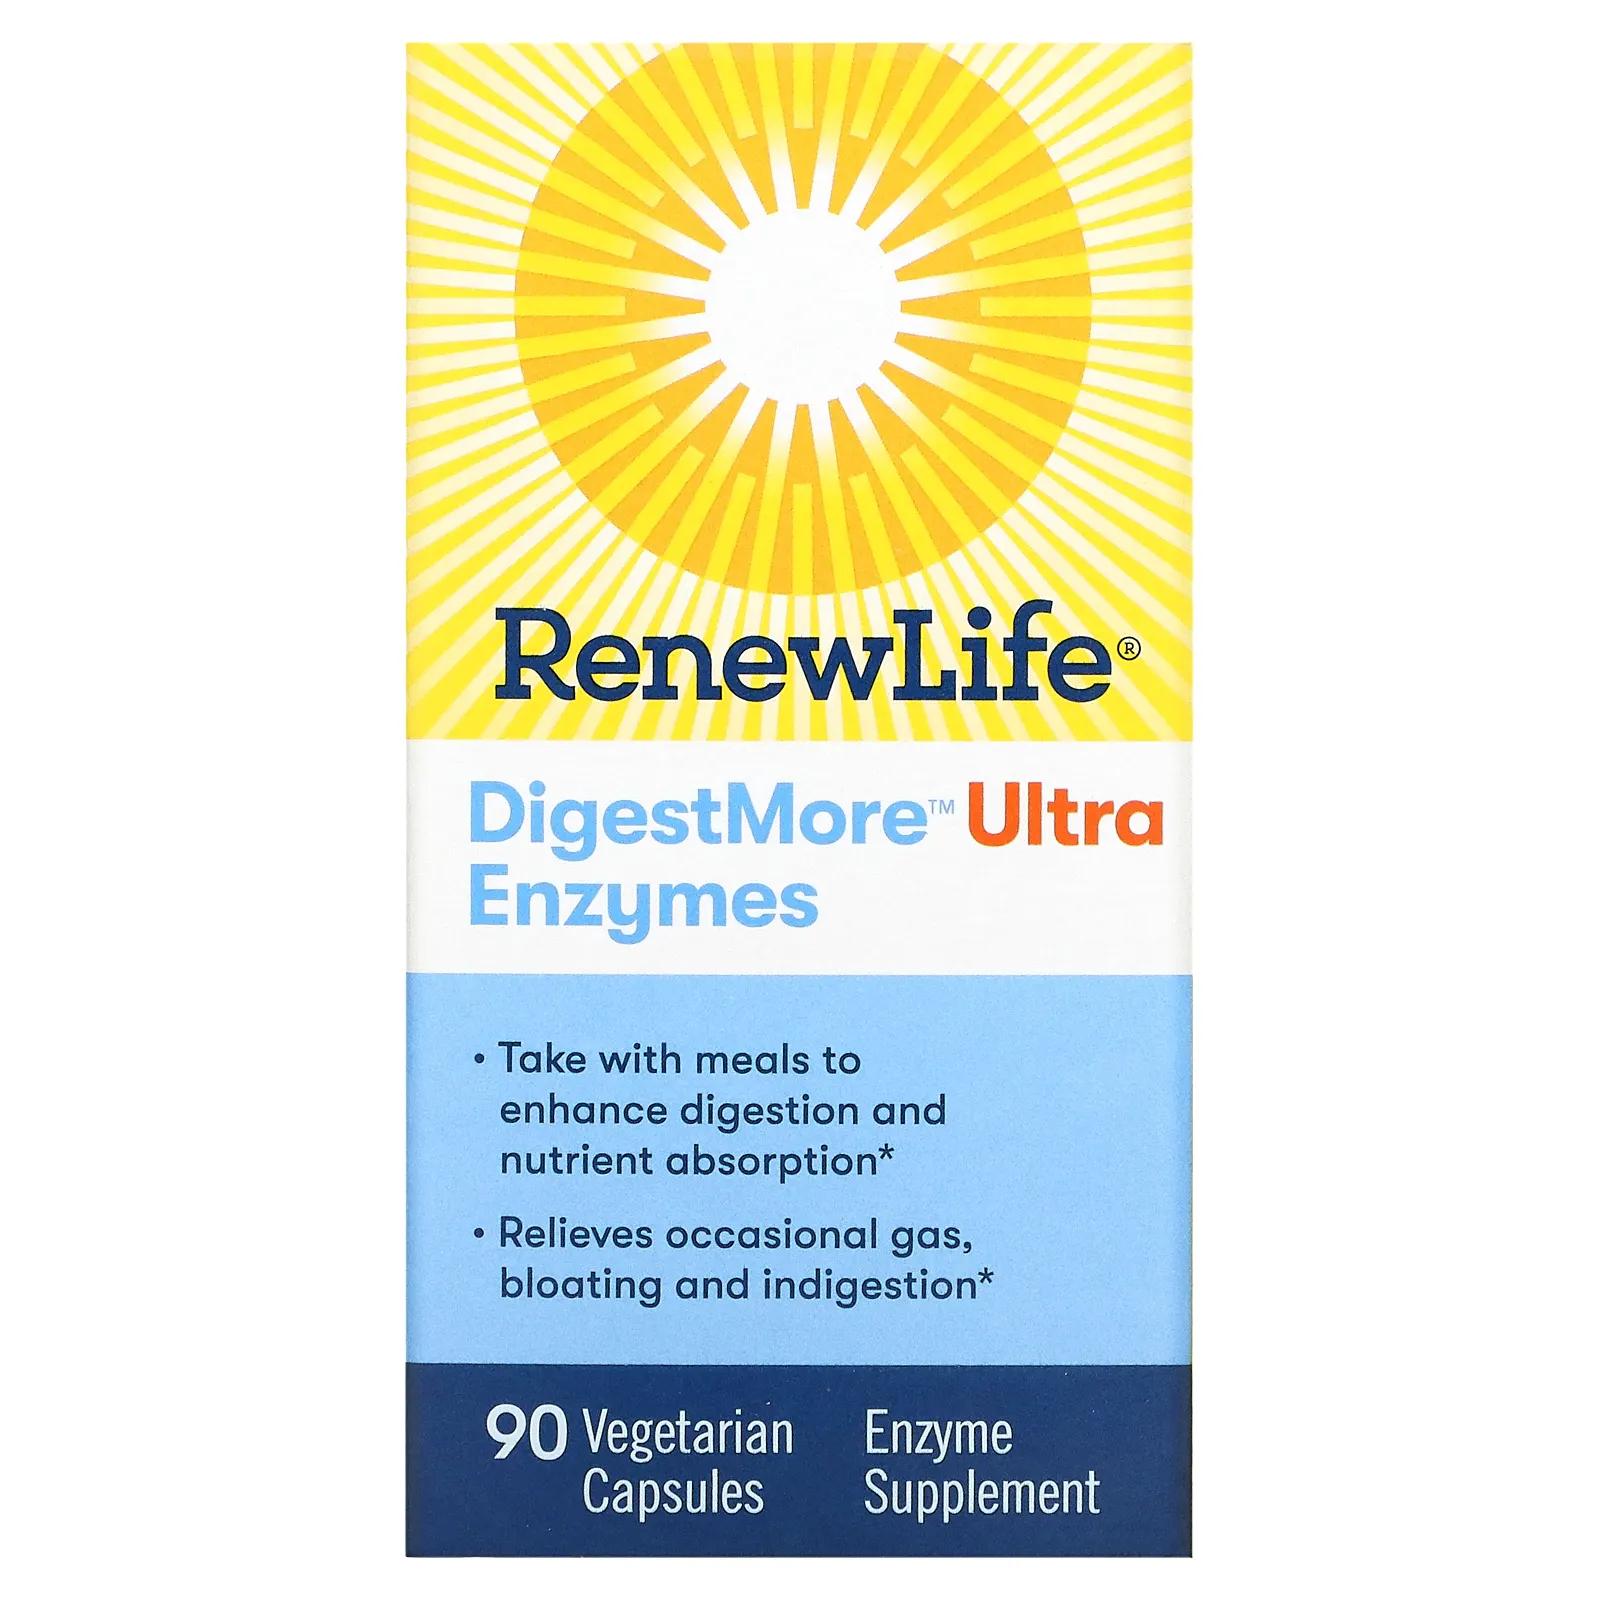 Renew Life DigestMore Ultra Enzymes 90 Vegetarian Capsules пробиотик для ежедневного применения 90 капсул digestmore ultra enzymes renew life